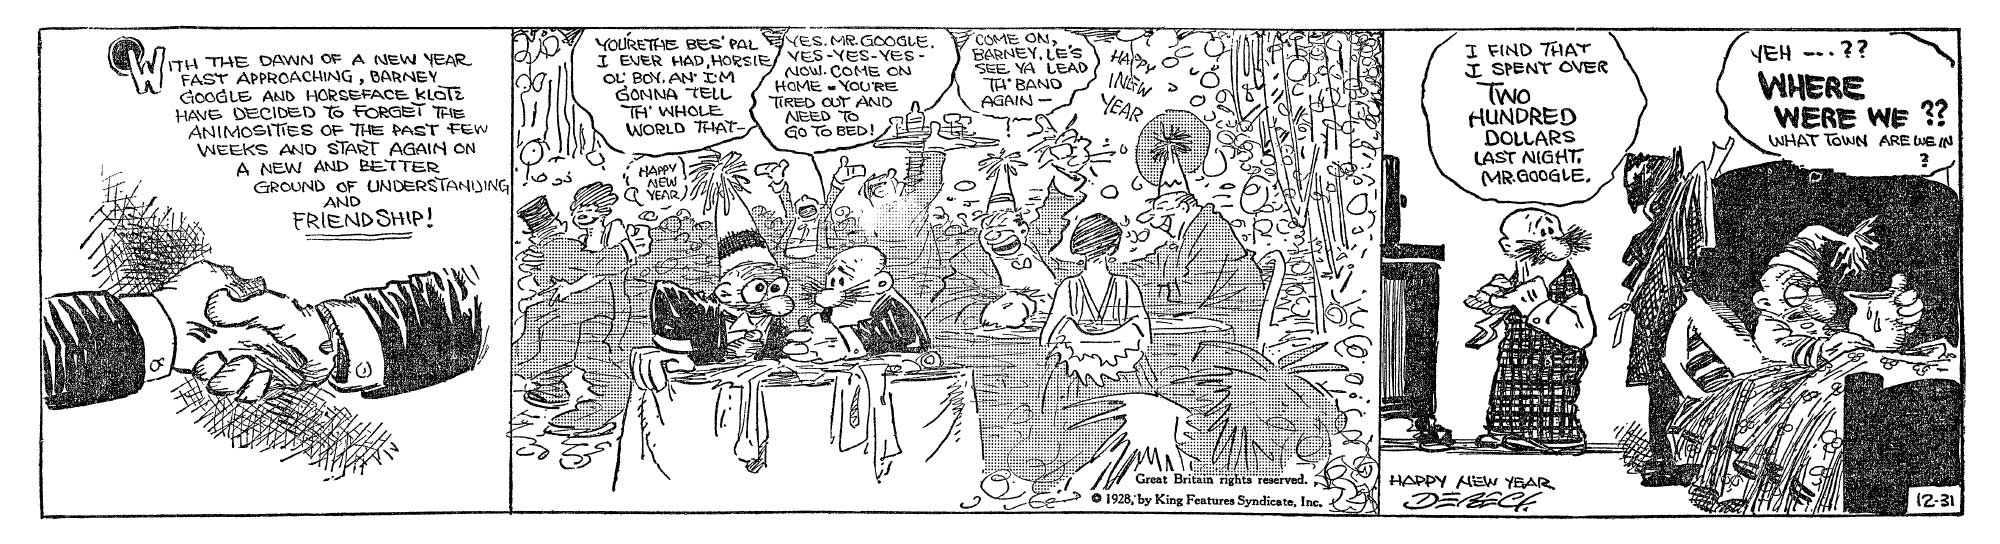 Barney Google, December 31, 1928